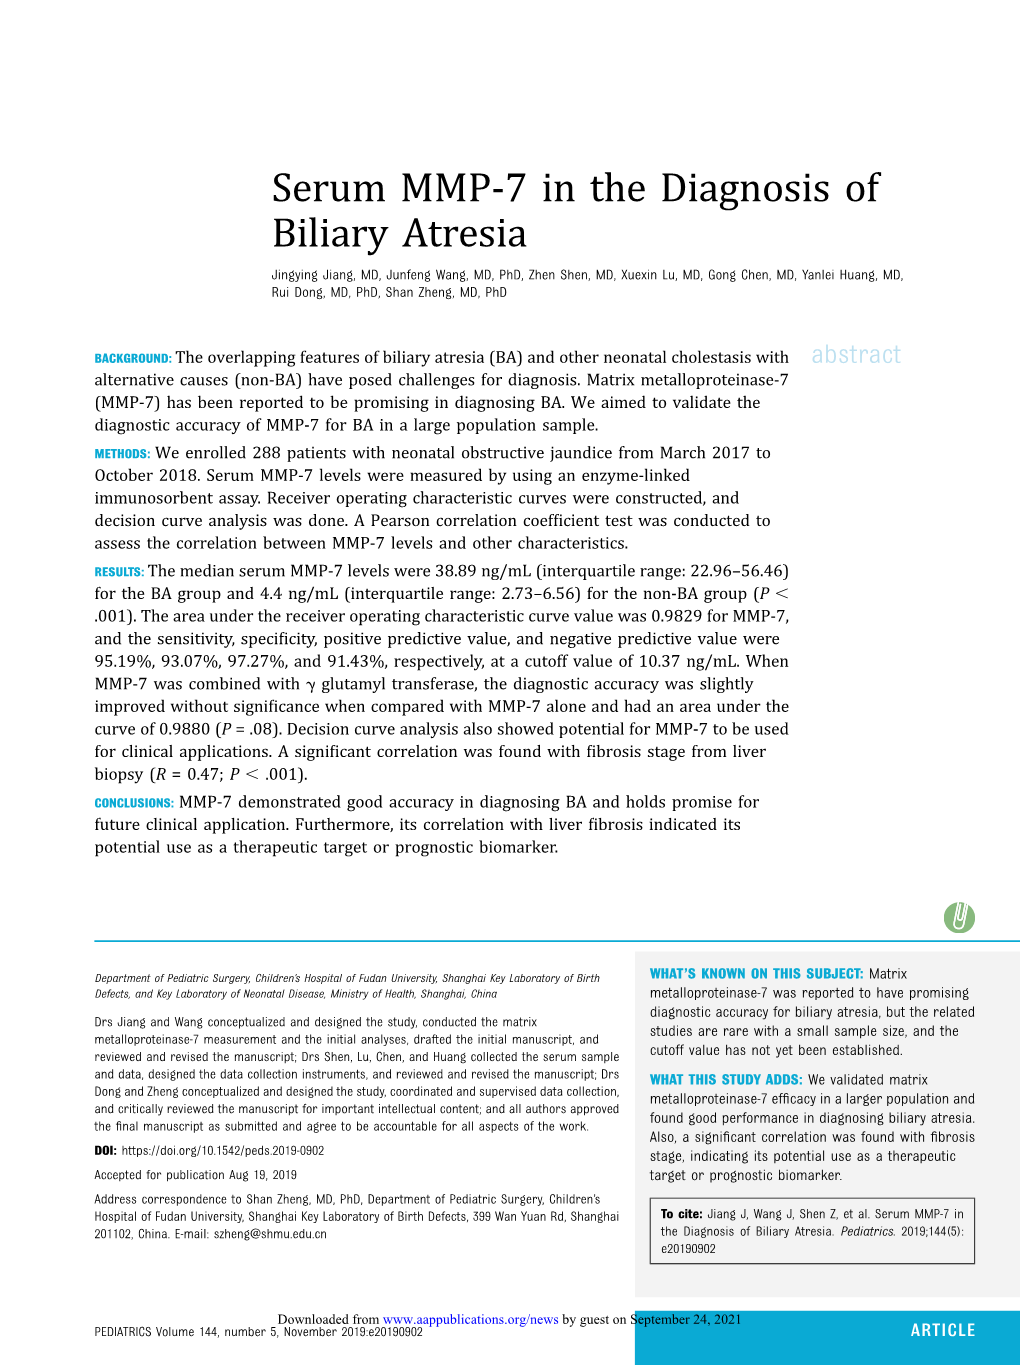 Serum MMP-7 in the Diagnosis of Biliary Atresia